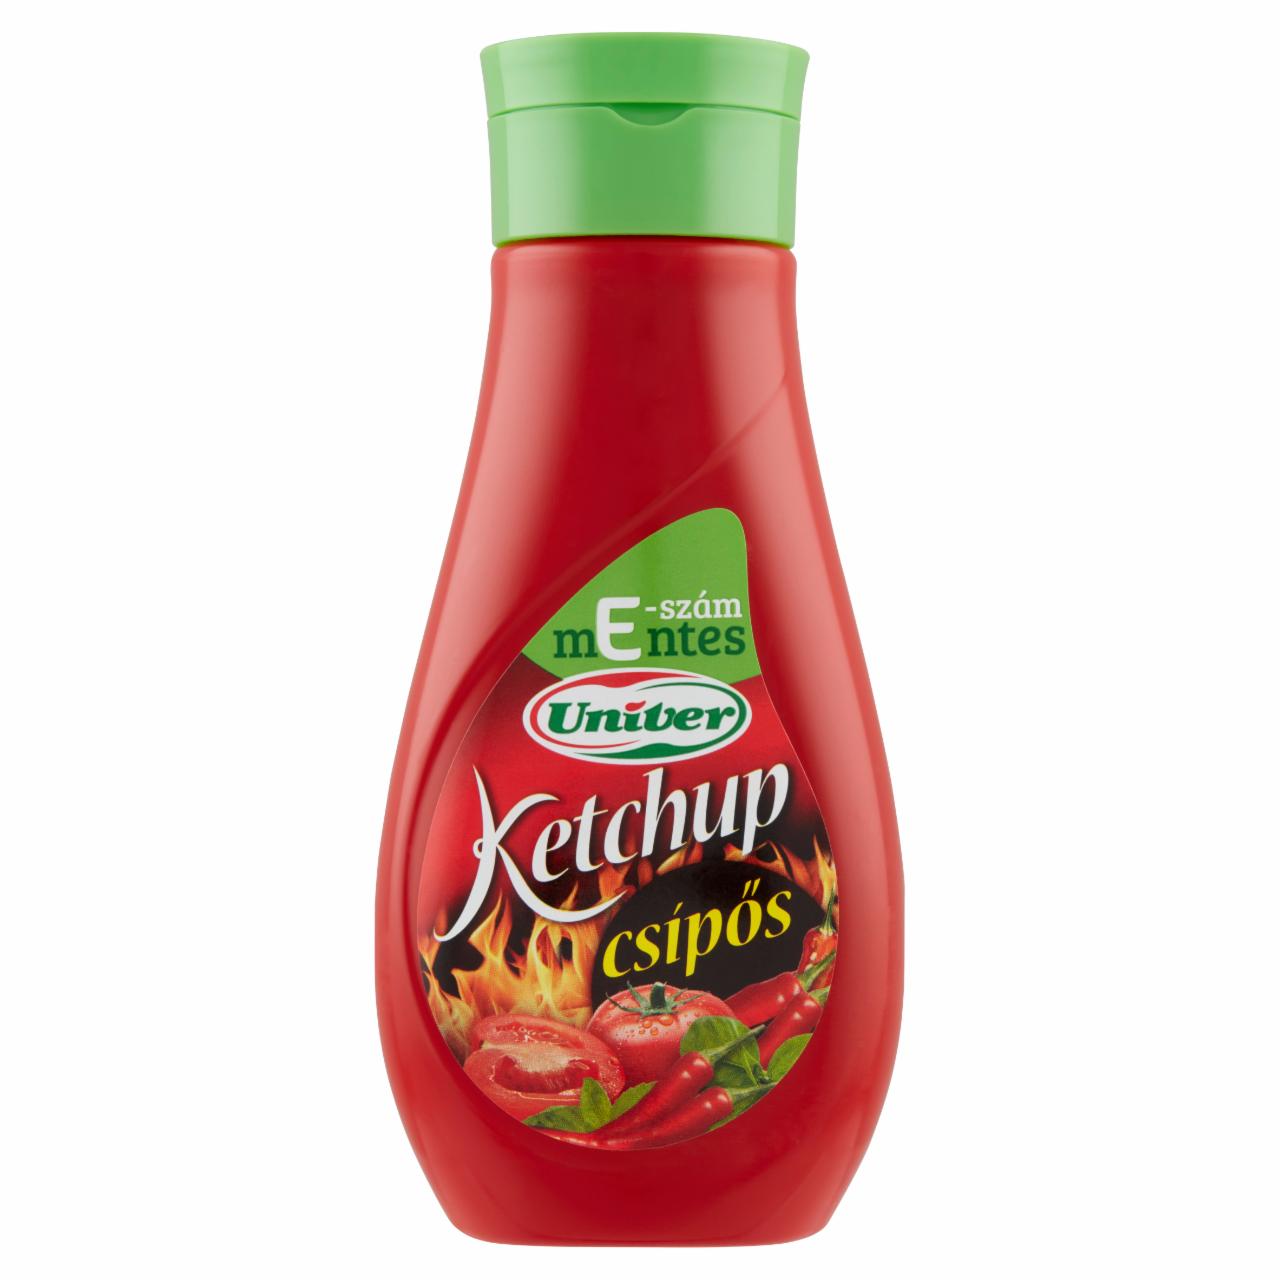 Képek - Univer csípős ketchup 470 g